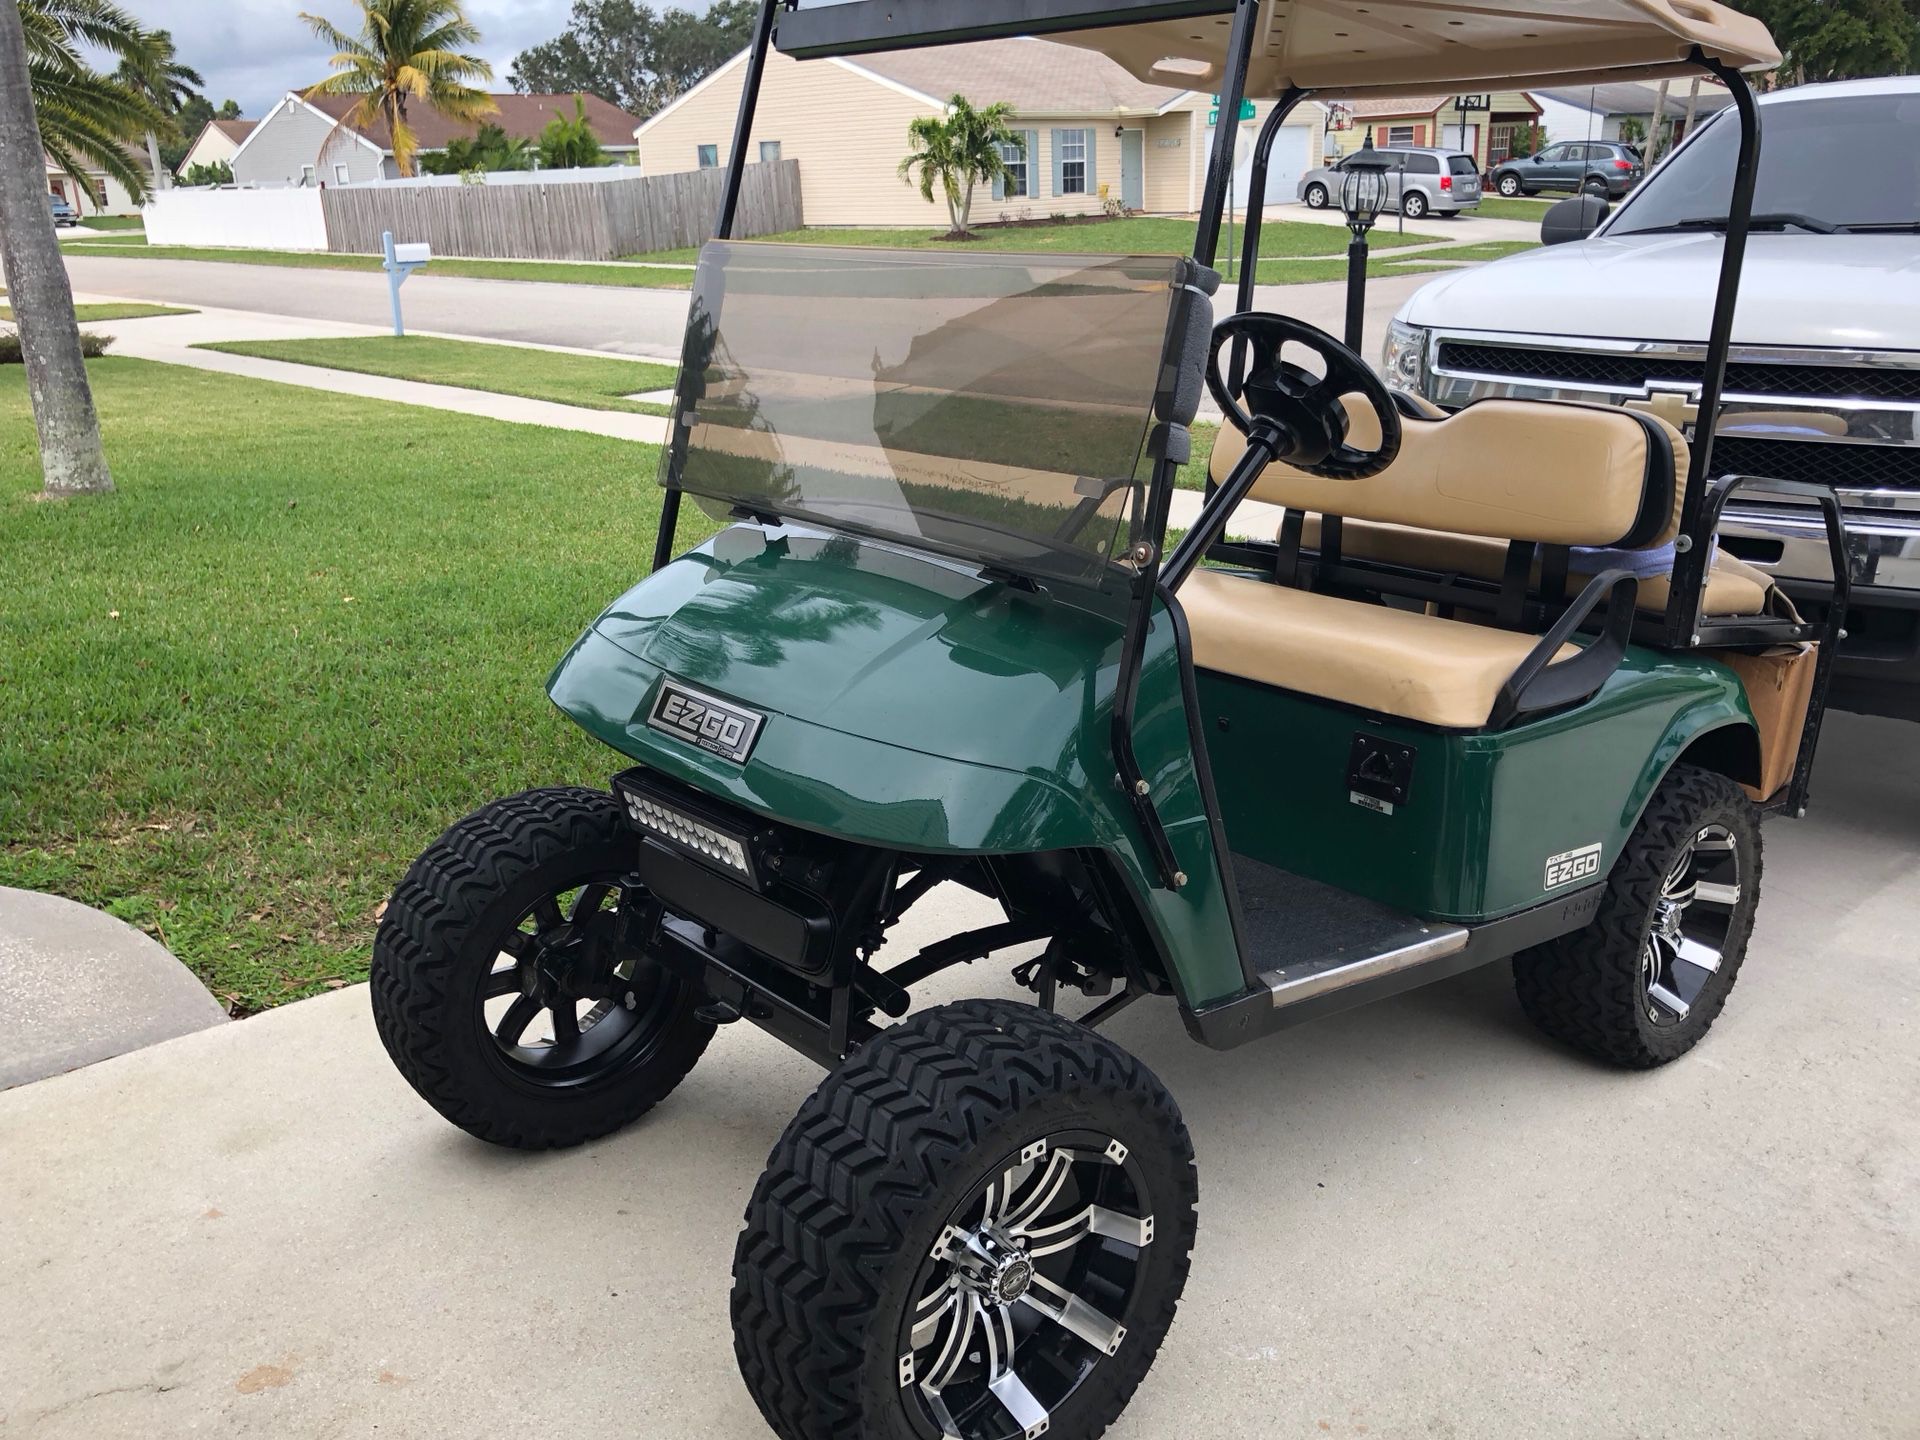 GCS Golf Cart Tire Shine Dressing and Plastic Golf Cart Cleaner - 11 fl oz